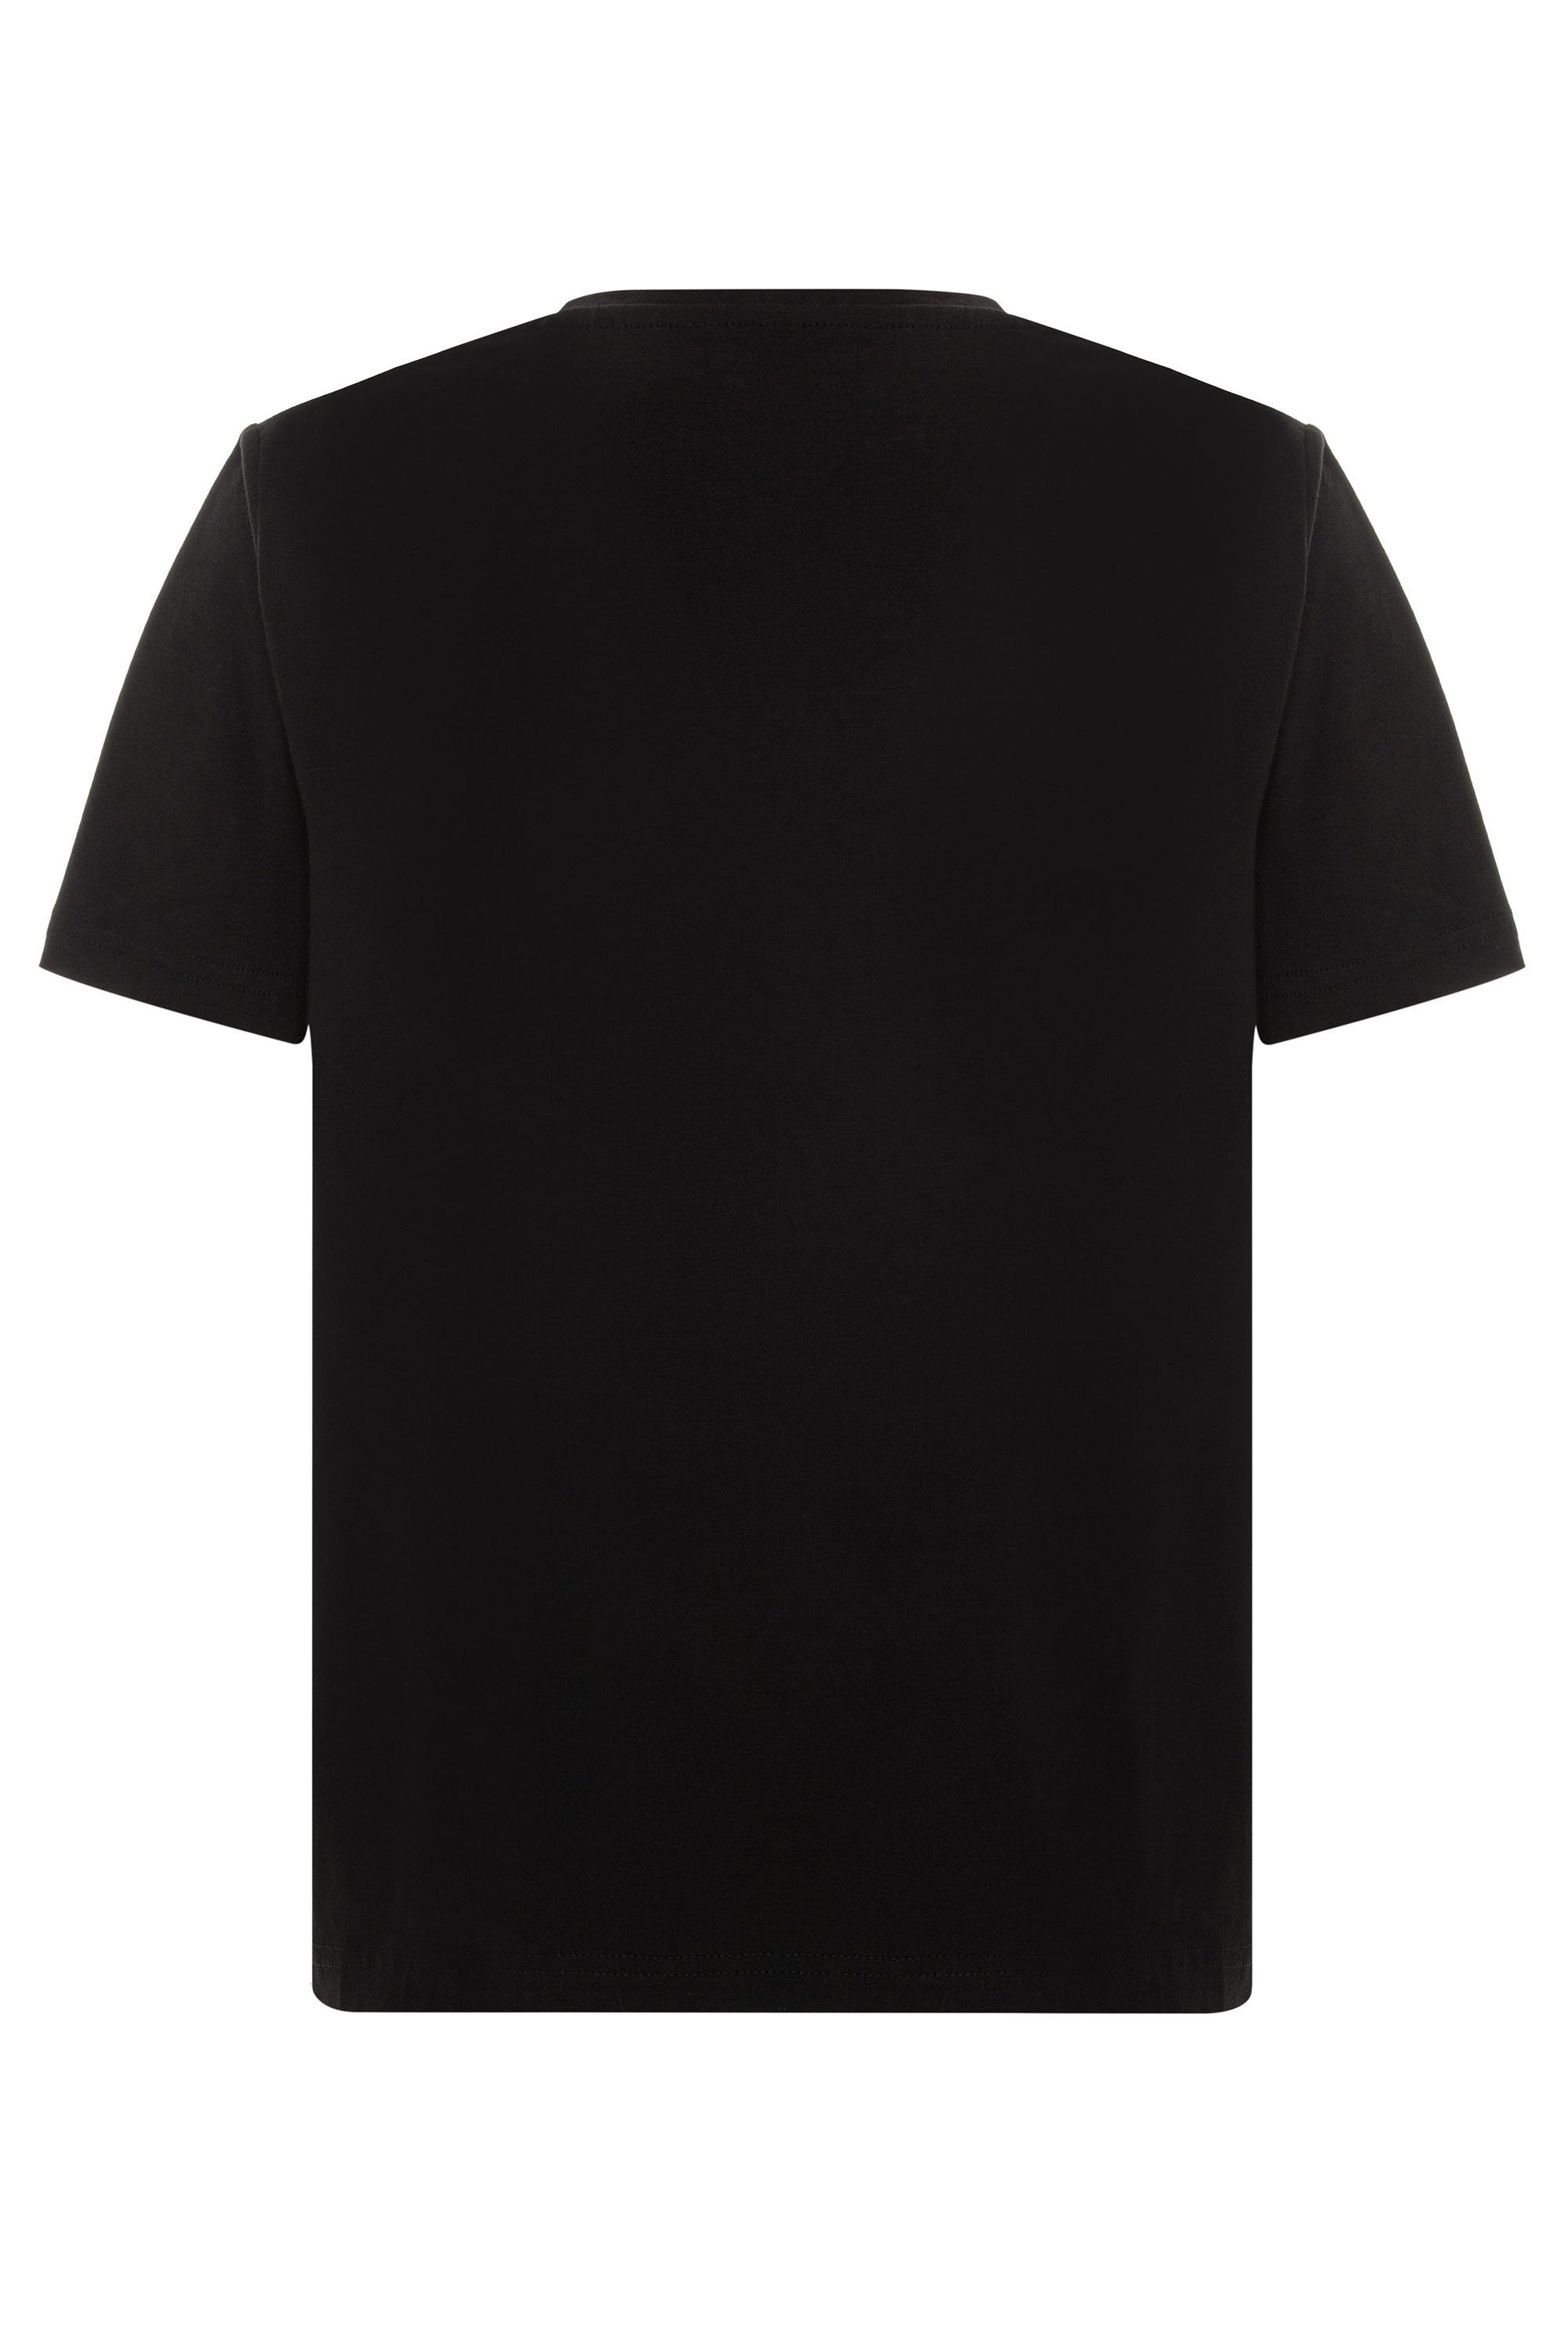 Baxx coolem T-Shirt Cipo & schwarz-weiß Print mit